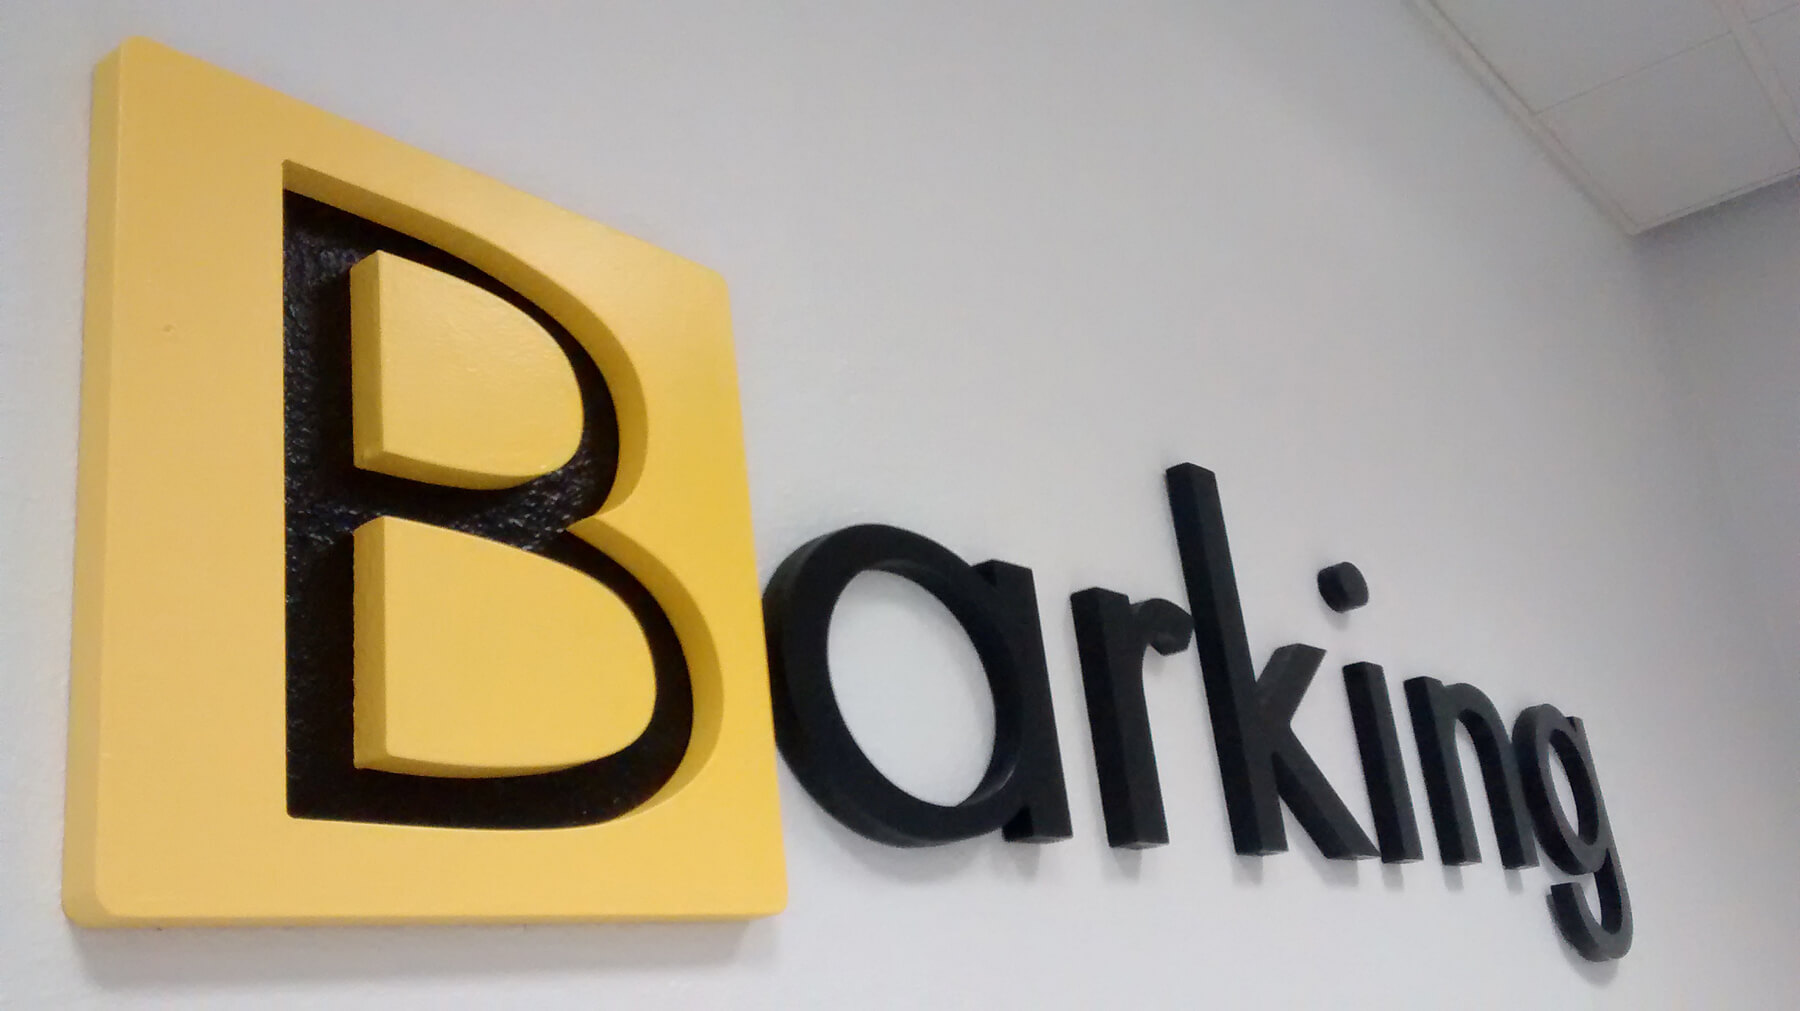 CNC Barking firma logo seinale